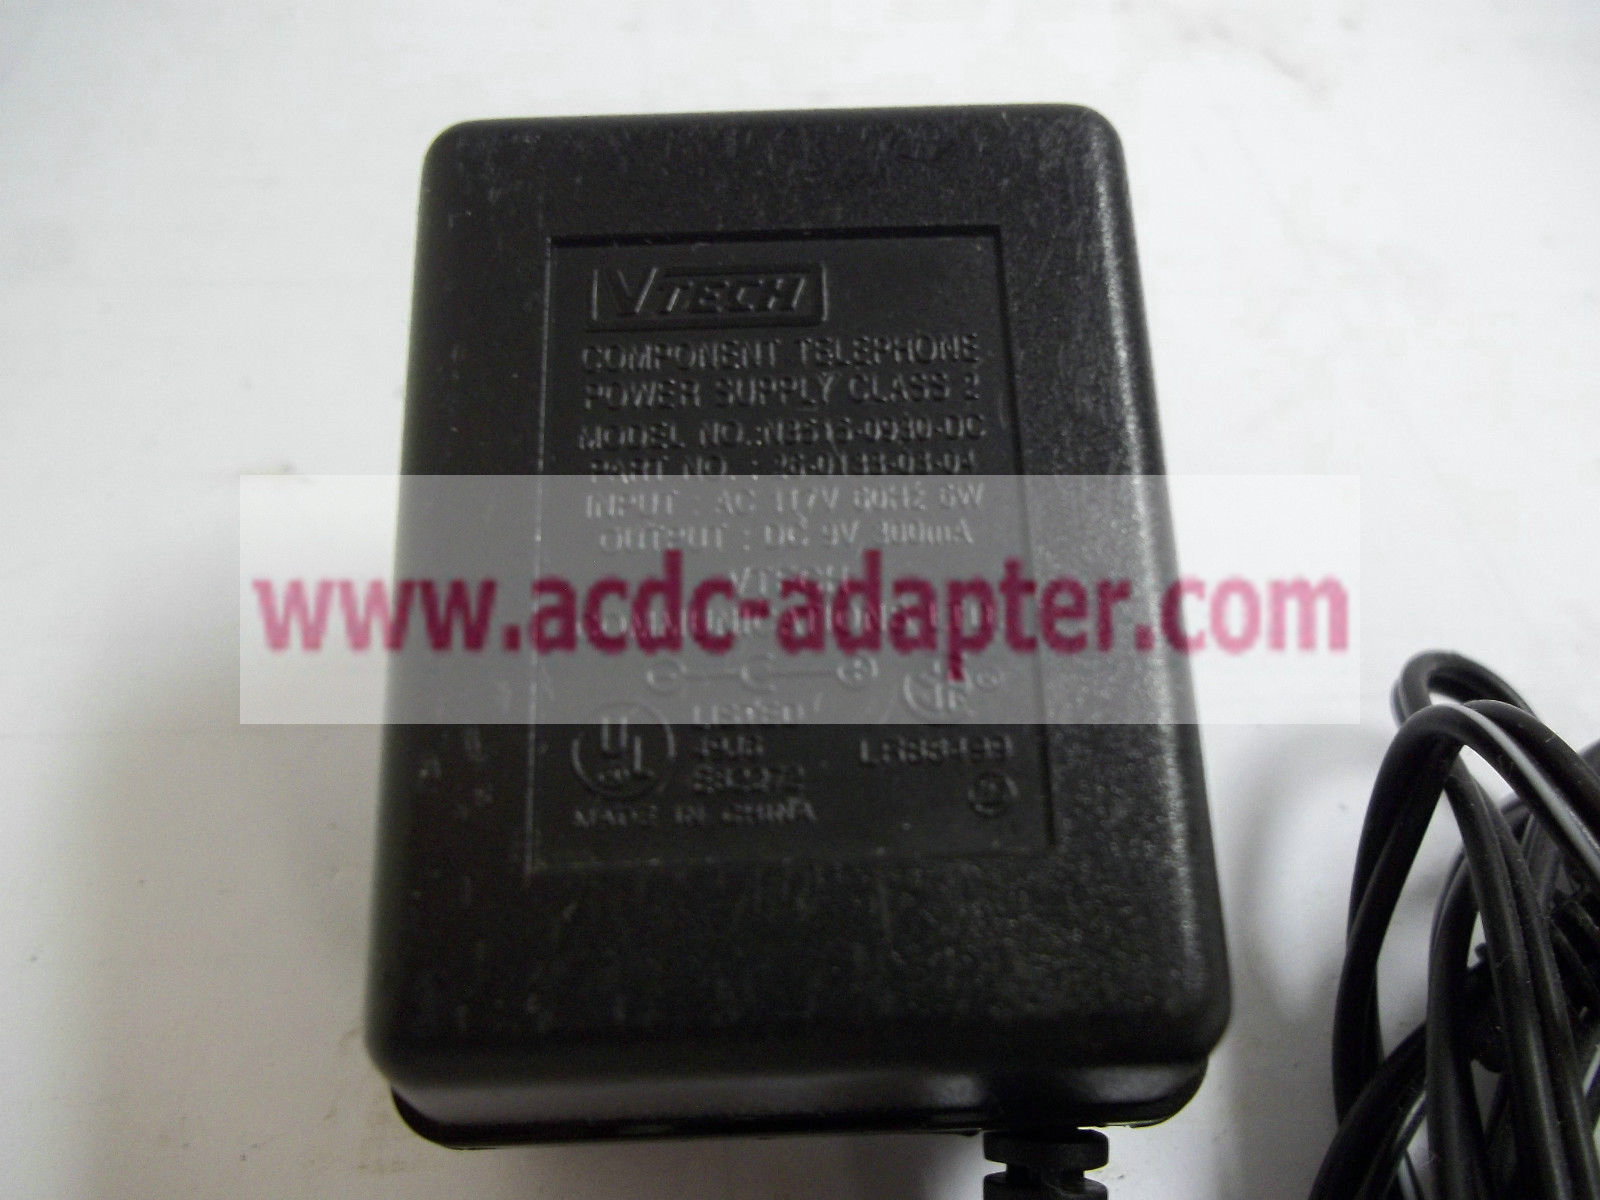 NEW Vtech N3515-0930-DC117v power supply 9V DC 300mA AC ADAPTER